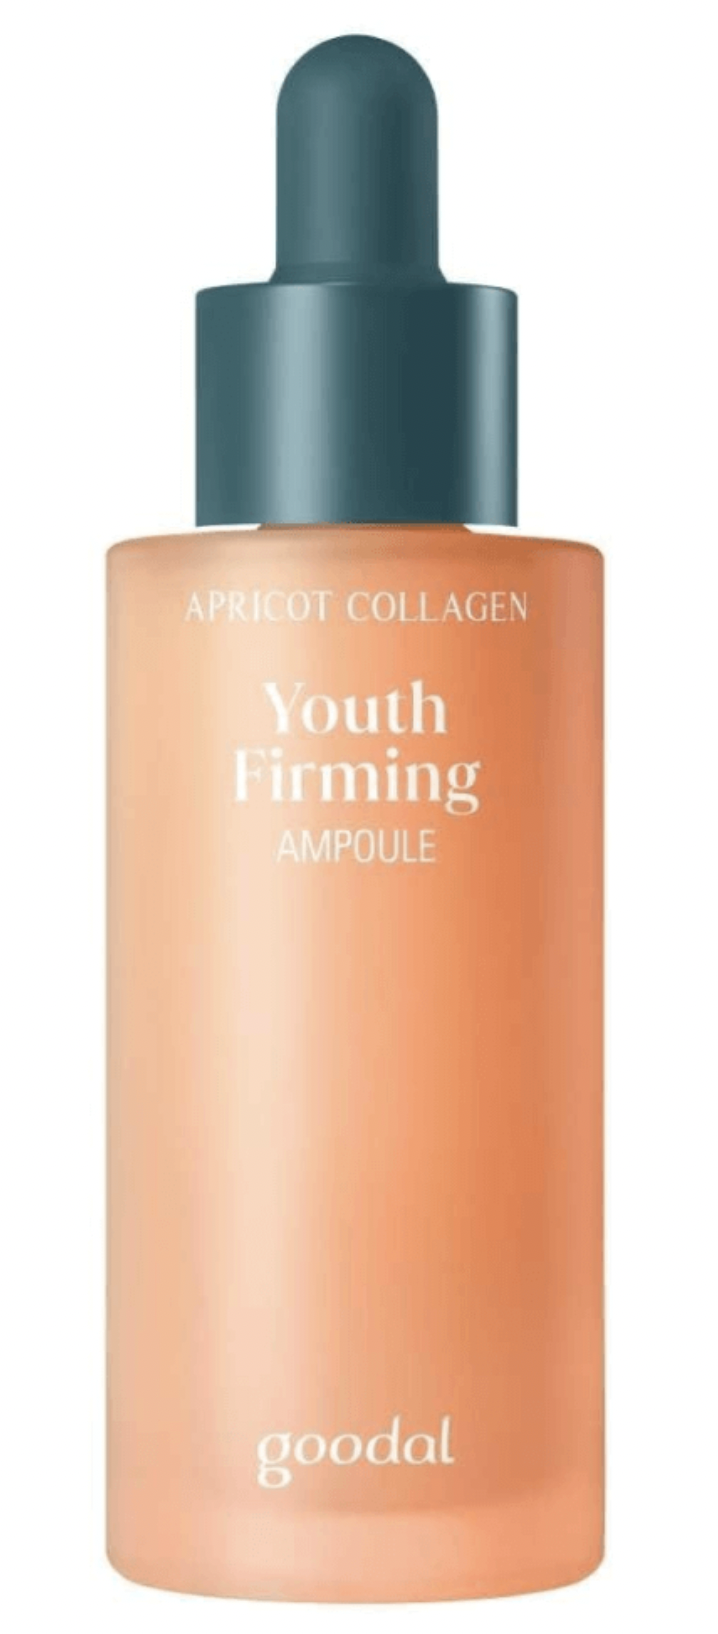 Укрепляющая липосомная ампула Goodal с абрикосом Apricot Collagen Youth Firming Ampoule комплекс matrigen complex а collagen 1 ampoule а коллаген 1 ампула х 4 мл